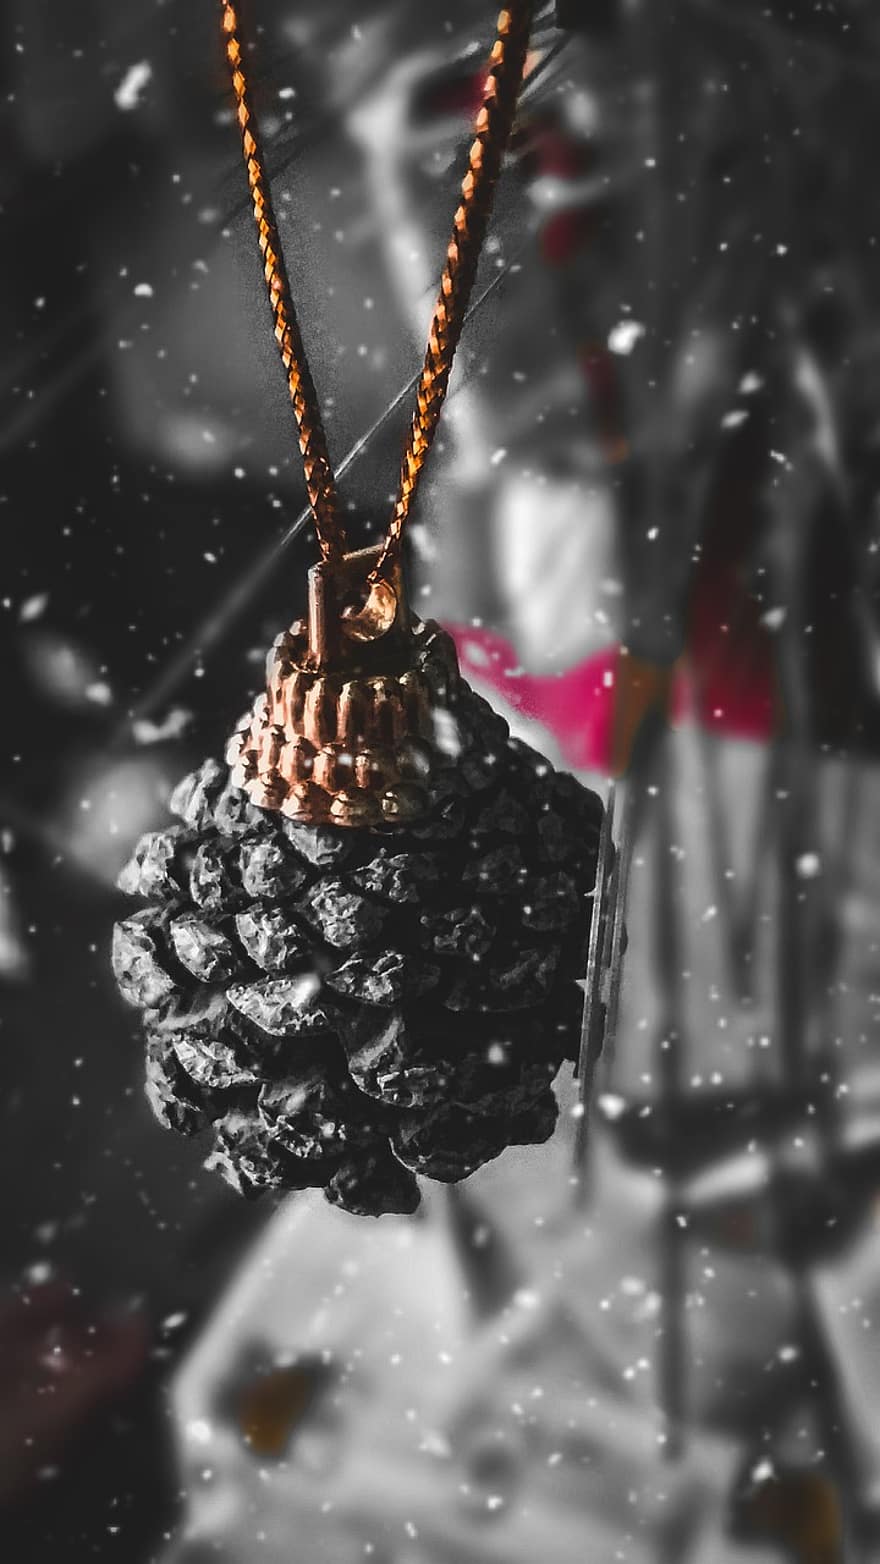 Decoration, Christmas, Ornament, Snow, close-up, winter, backgrounds, celebration, season, gift, tree